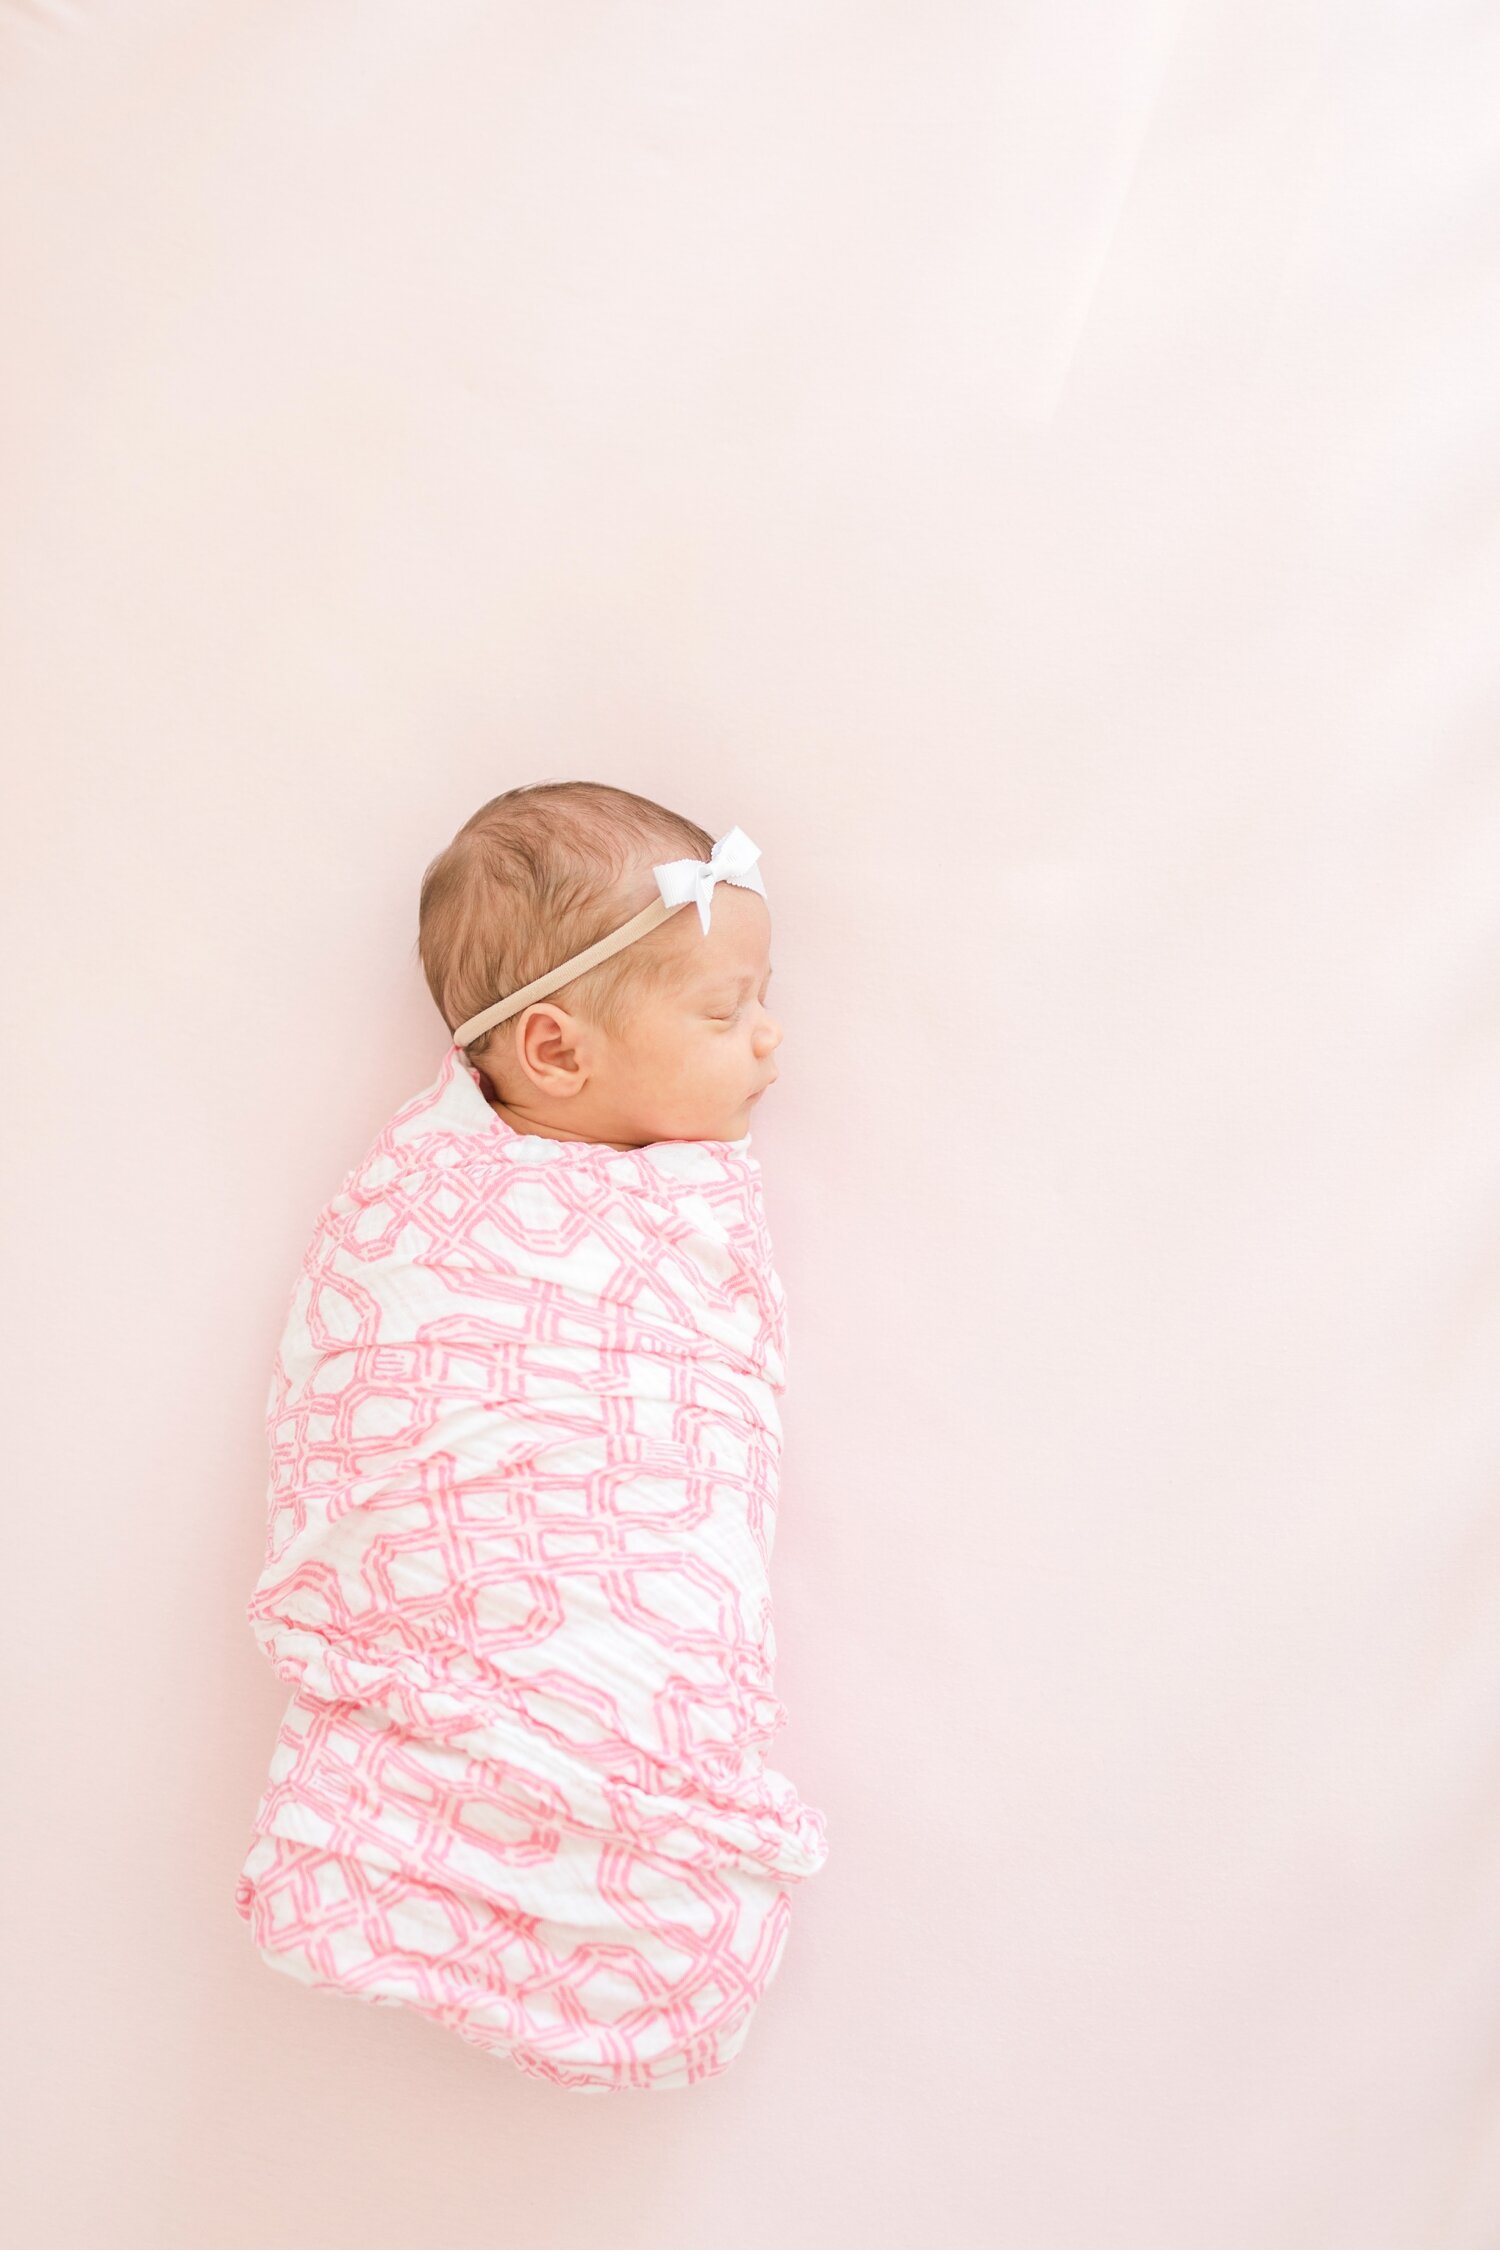 Hall Newborn-230_Baltimore-Maryland-newborn-family-photography-anna-grace-photography-photo.jpg